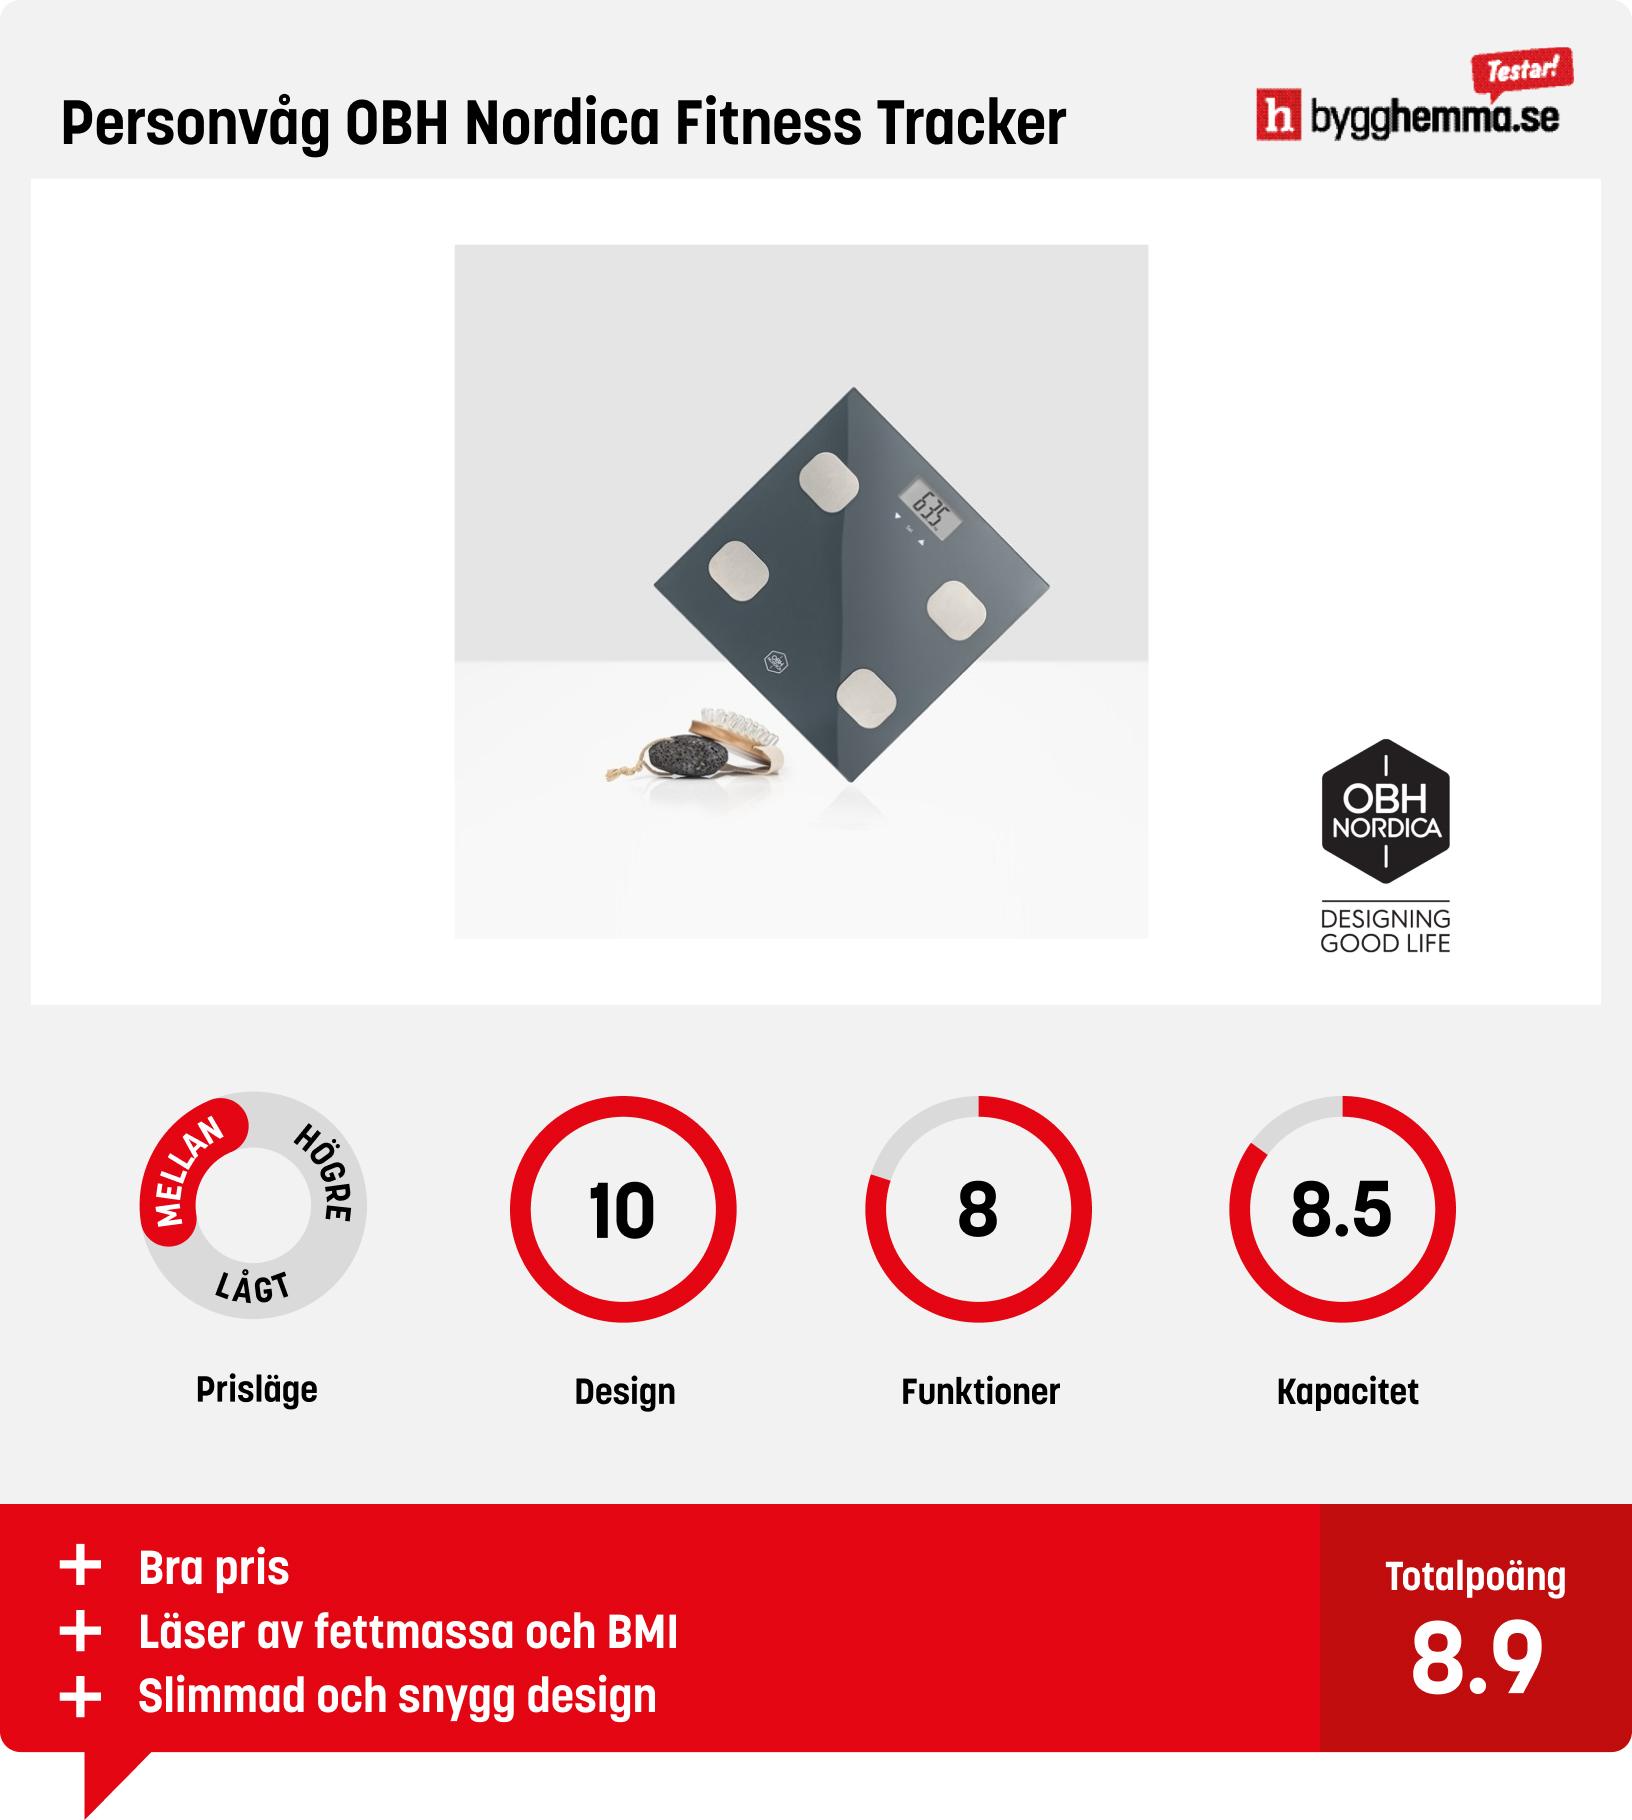 Personvåg bäst i test - Personvåg OBH Nordica Fitness Tracker